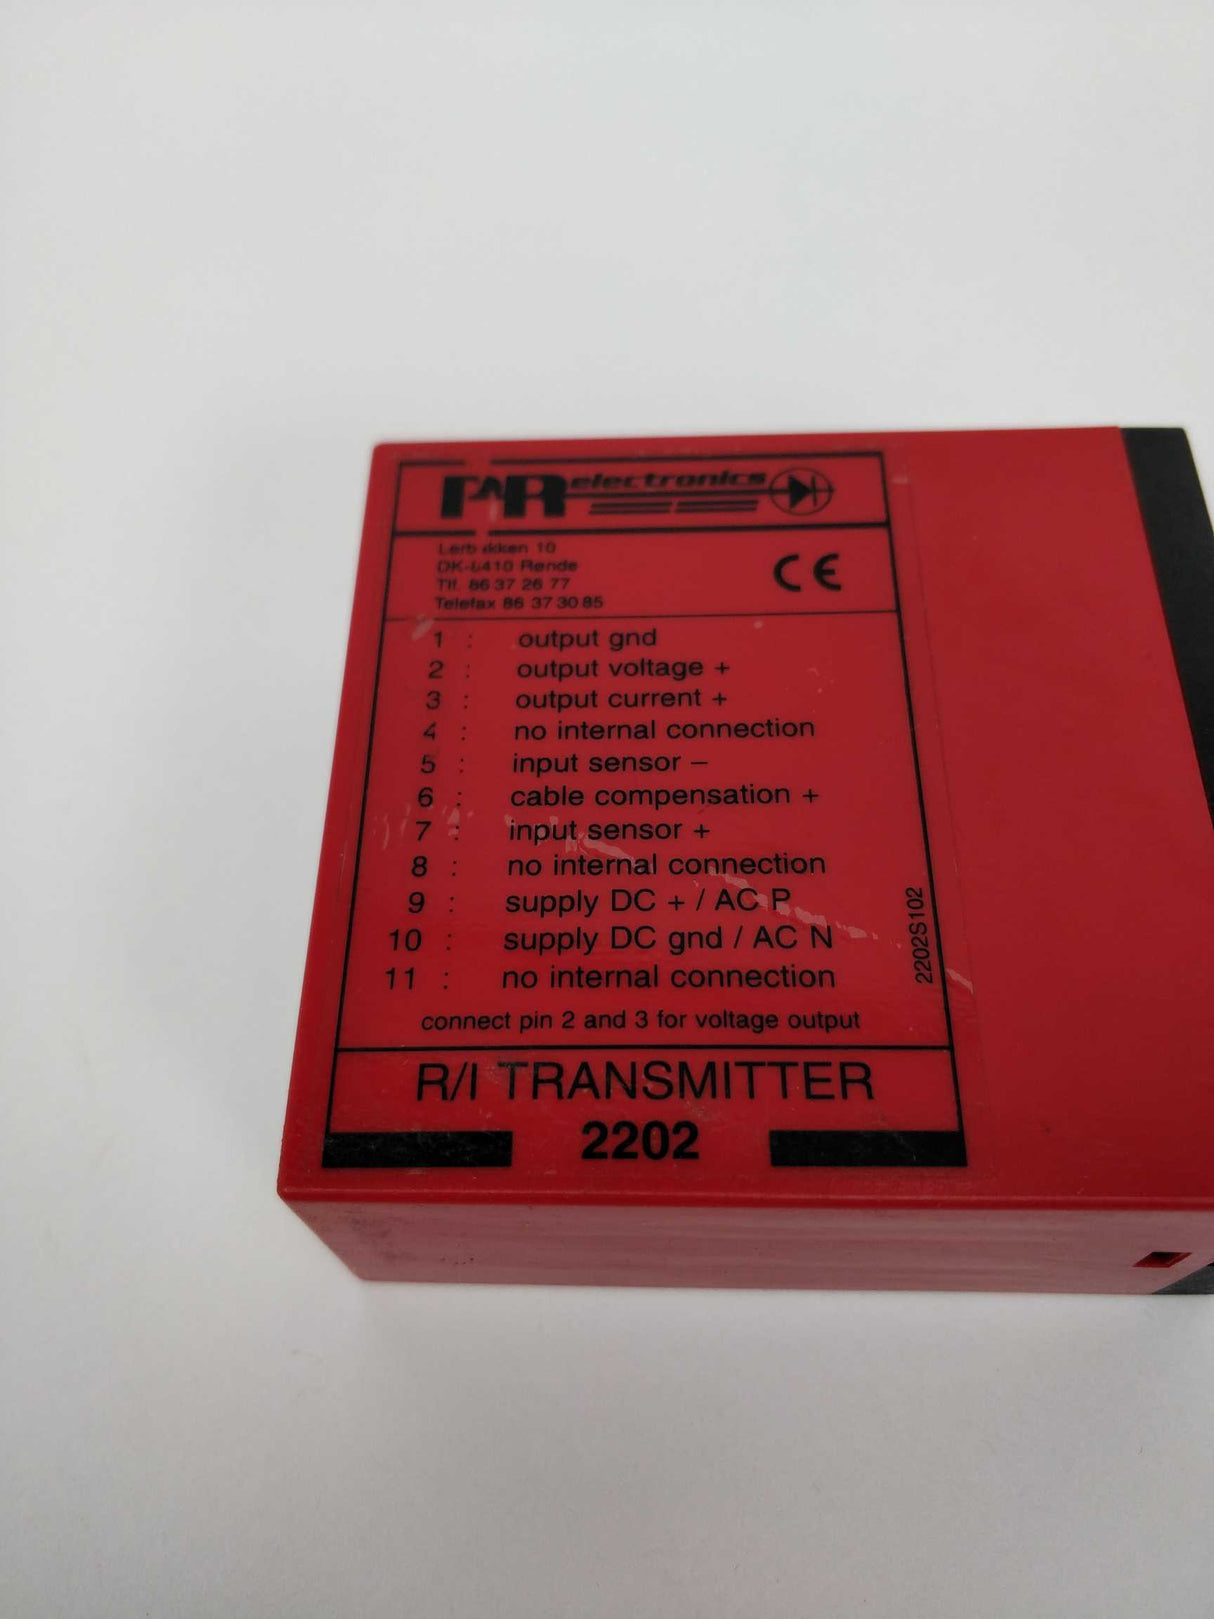 PR Electronics 2202 R2D Serial No. 010296291 R/I Transmitter